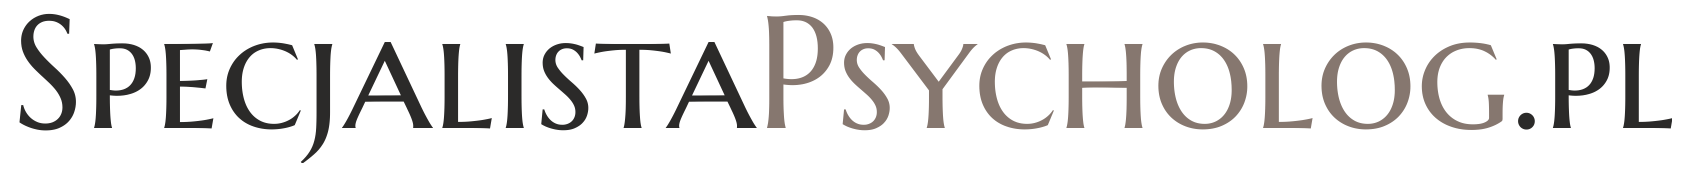 SpecjalistaPsycholog Logo